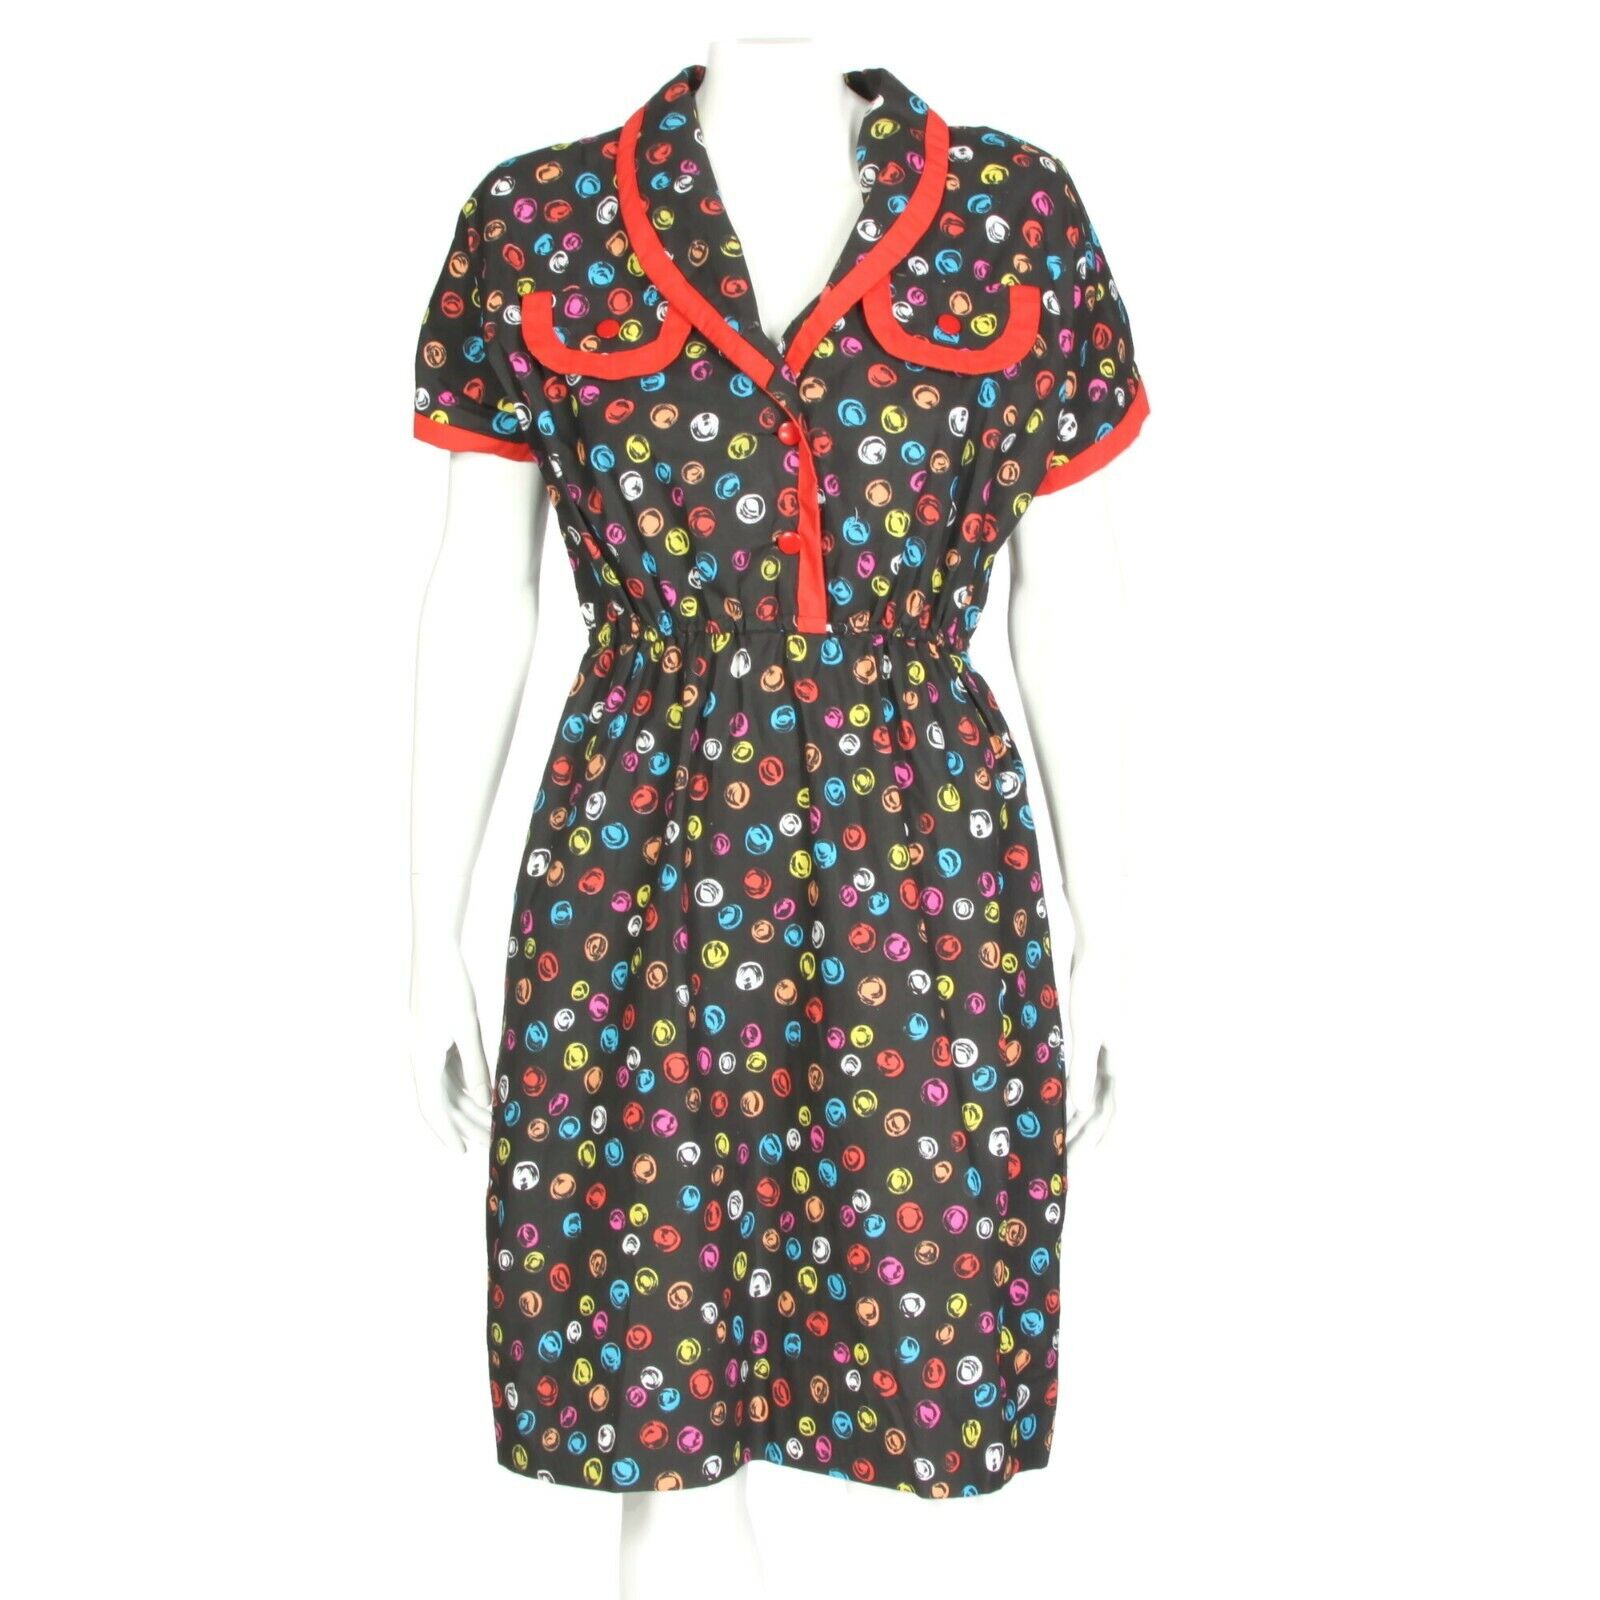 Vintage 1980s Rainbow Polka dot Pop Art Dress Rockabilly Retro size S/M - 084